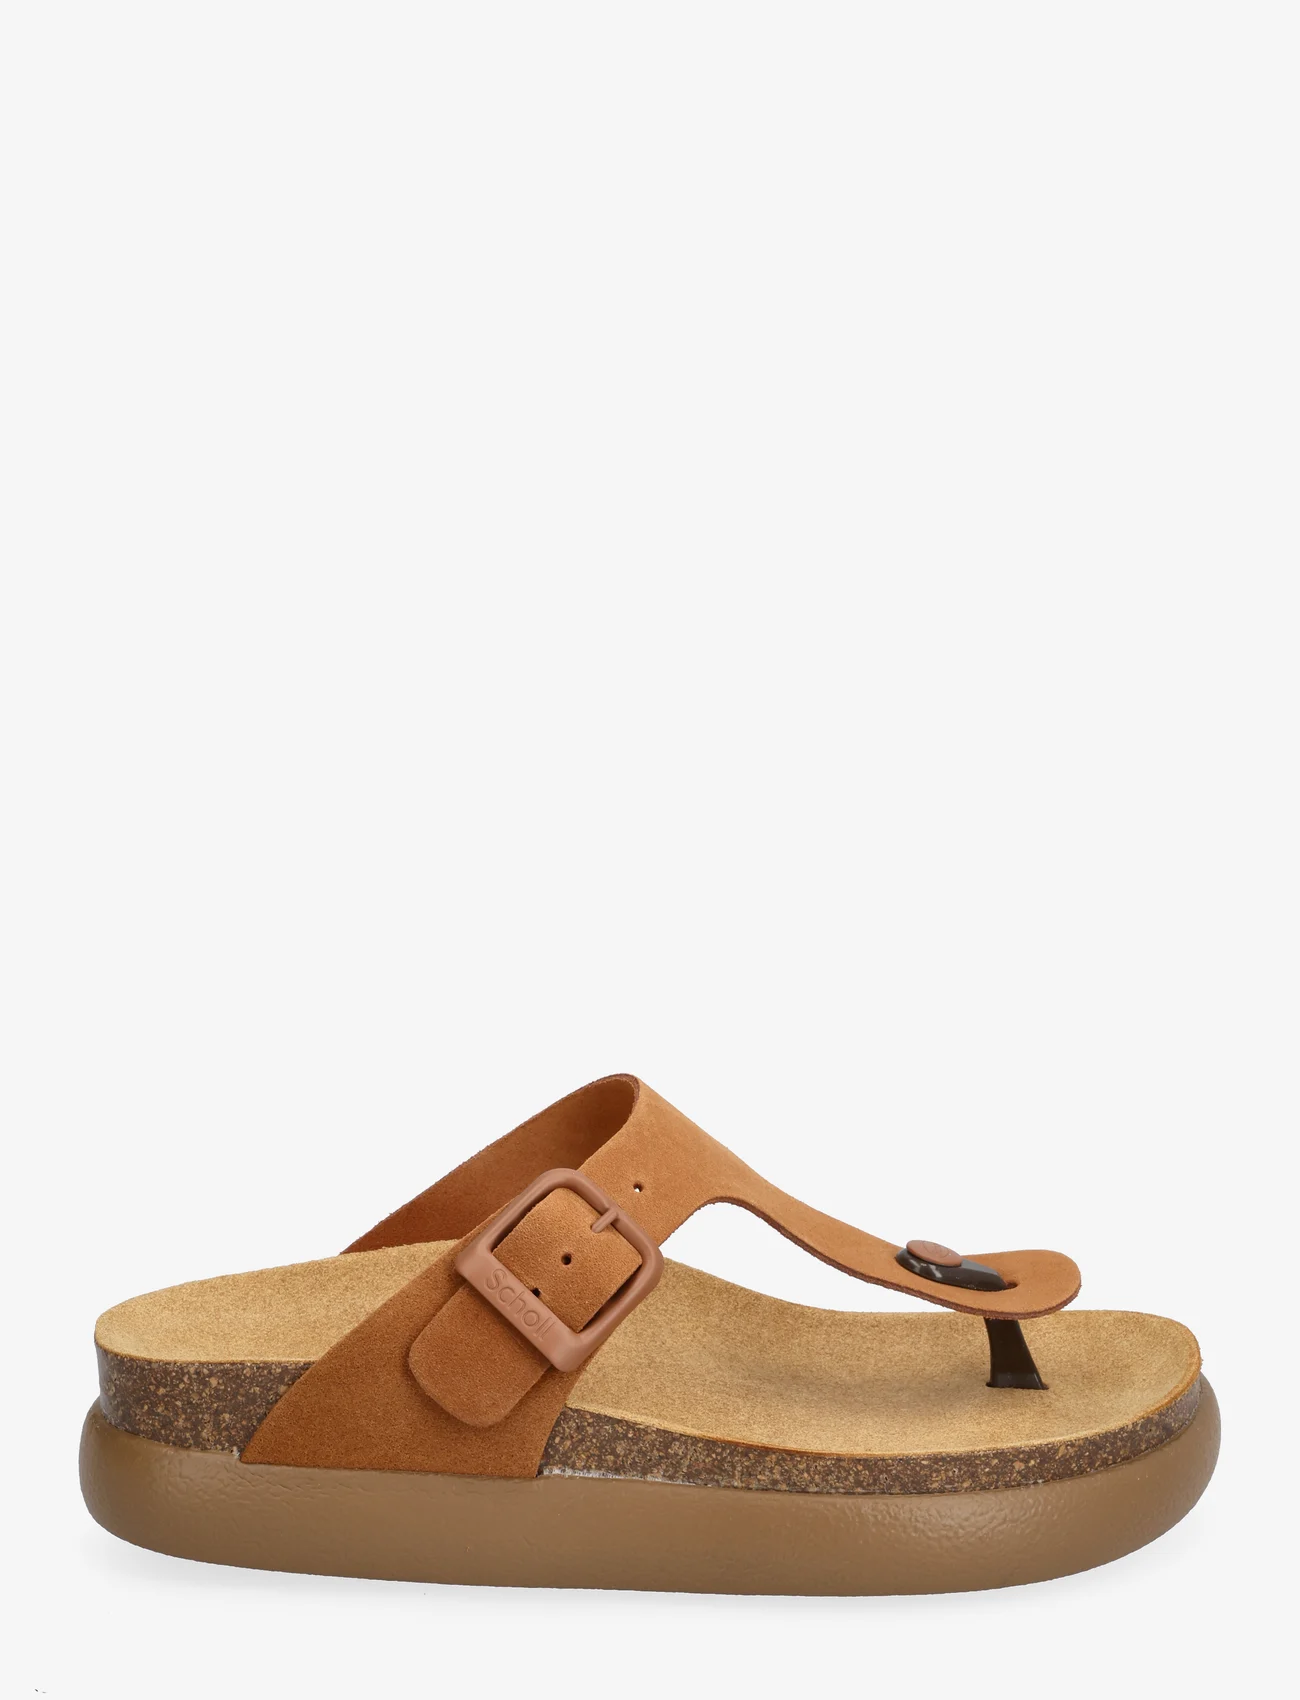 Scholl - SL ANAIS CHUNKY SUEDE - flat sandals - brandy - 1